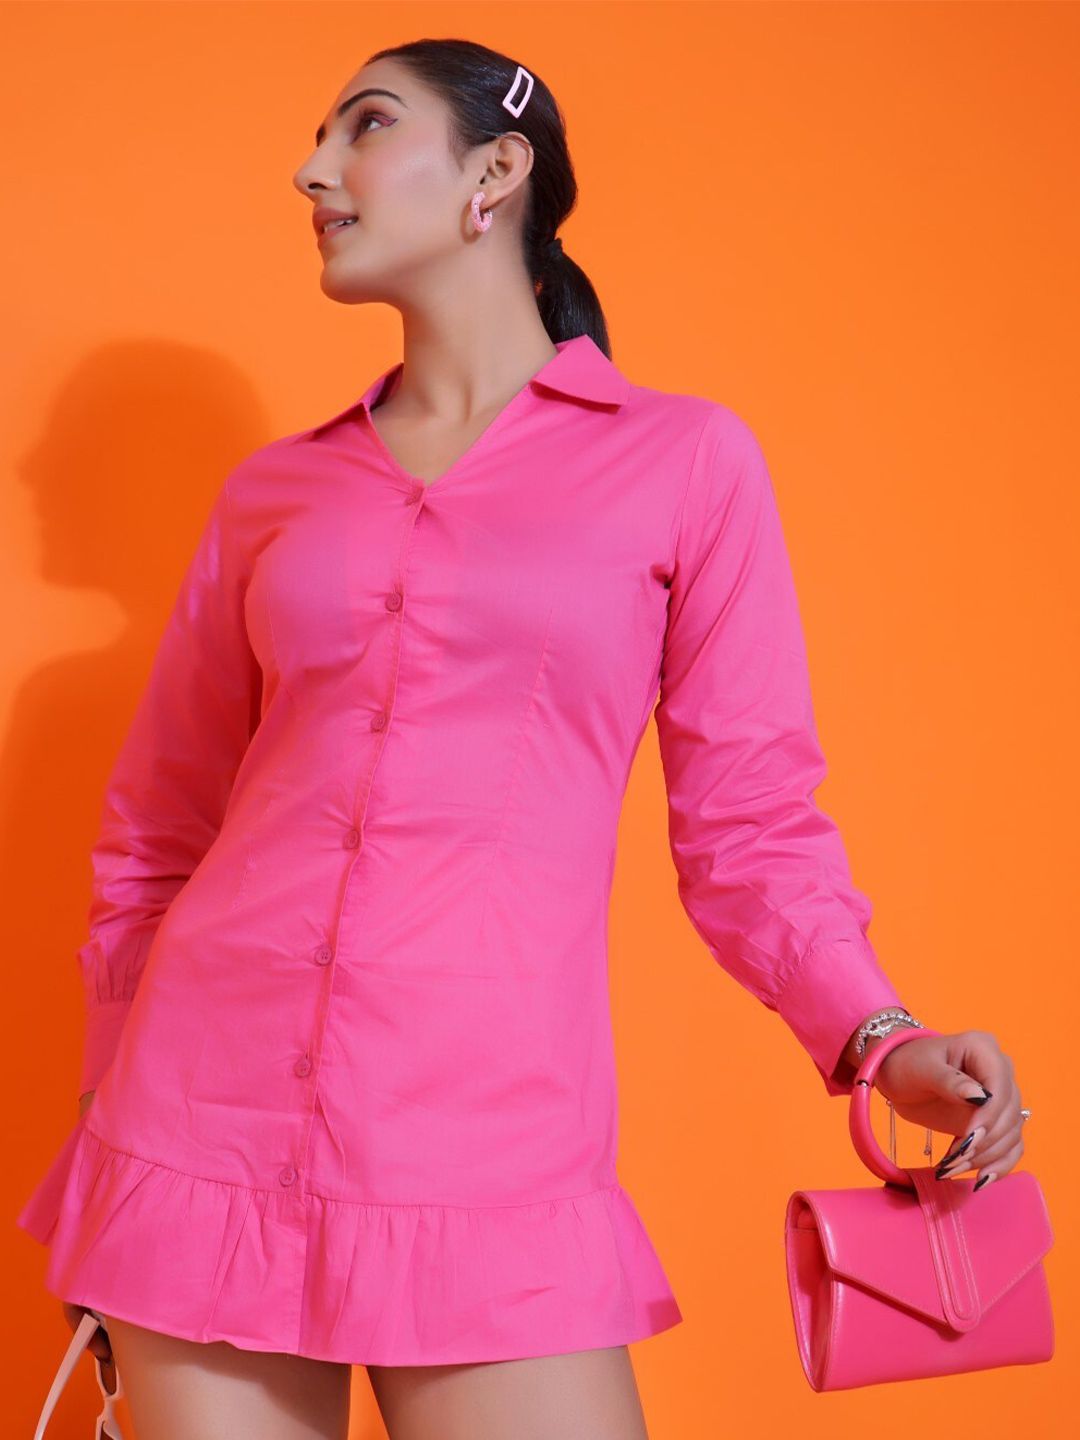 Stylecast X Hersheinbox Pink Dress Price in India